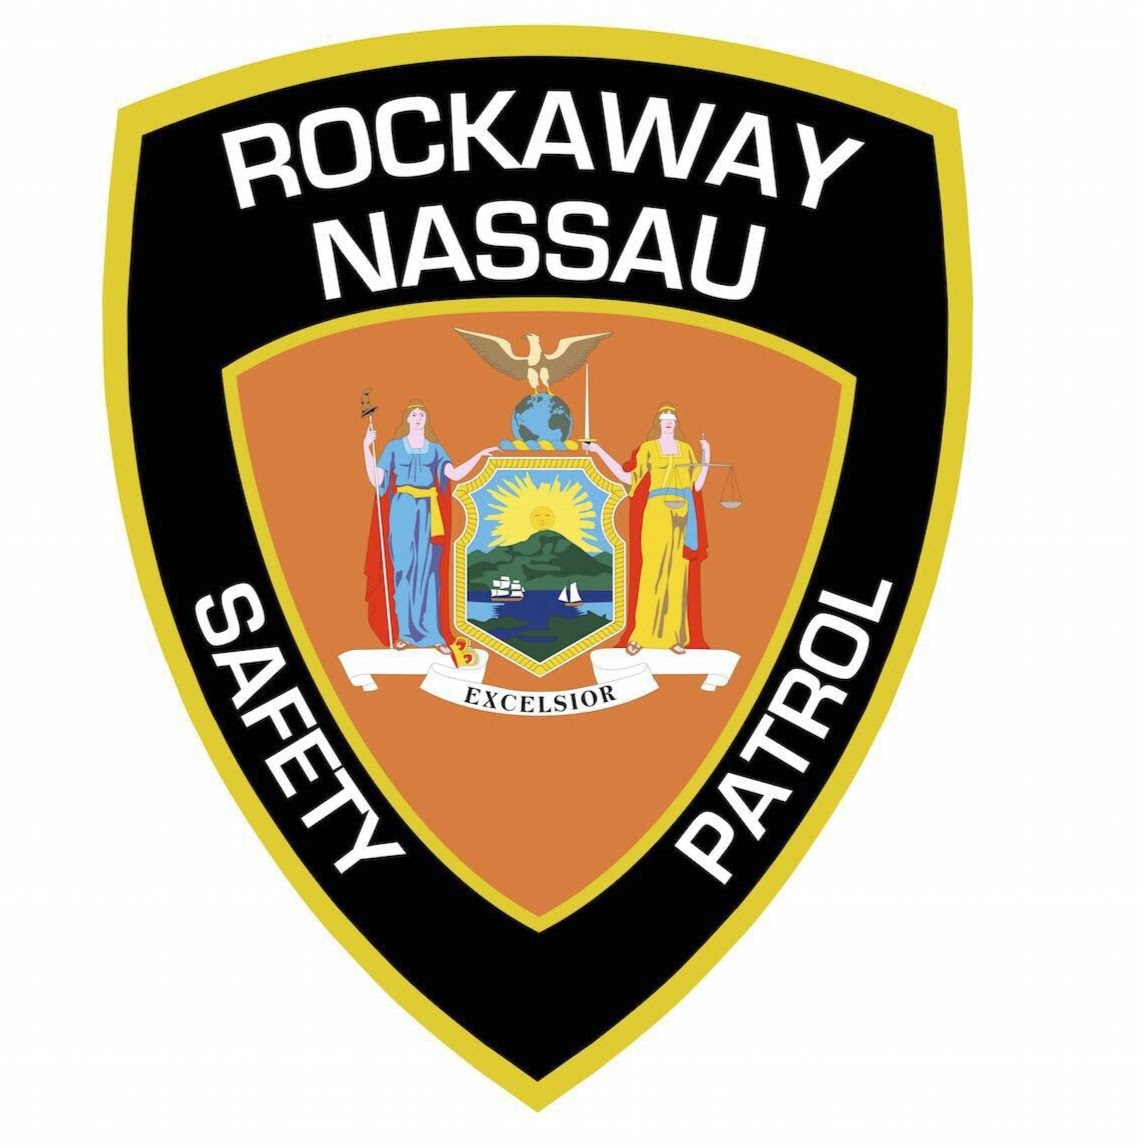 Photo of Rockaway Nassau Safety Patrol (Rockaway Shomrim) in Queens City, New York, United States - 1 Picture of Point of interest, Establishment